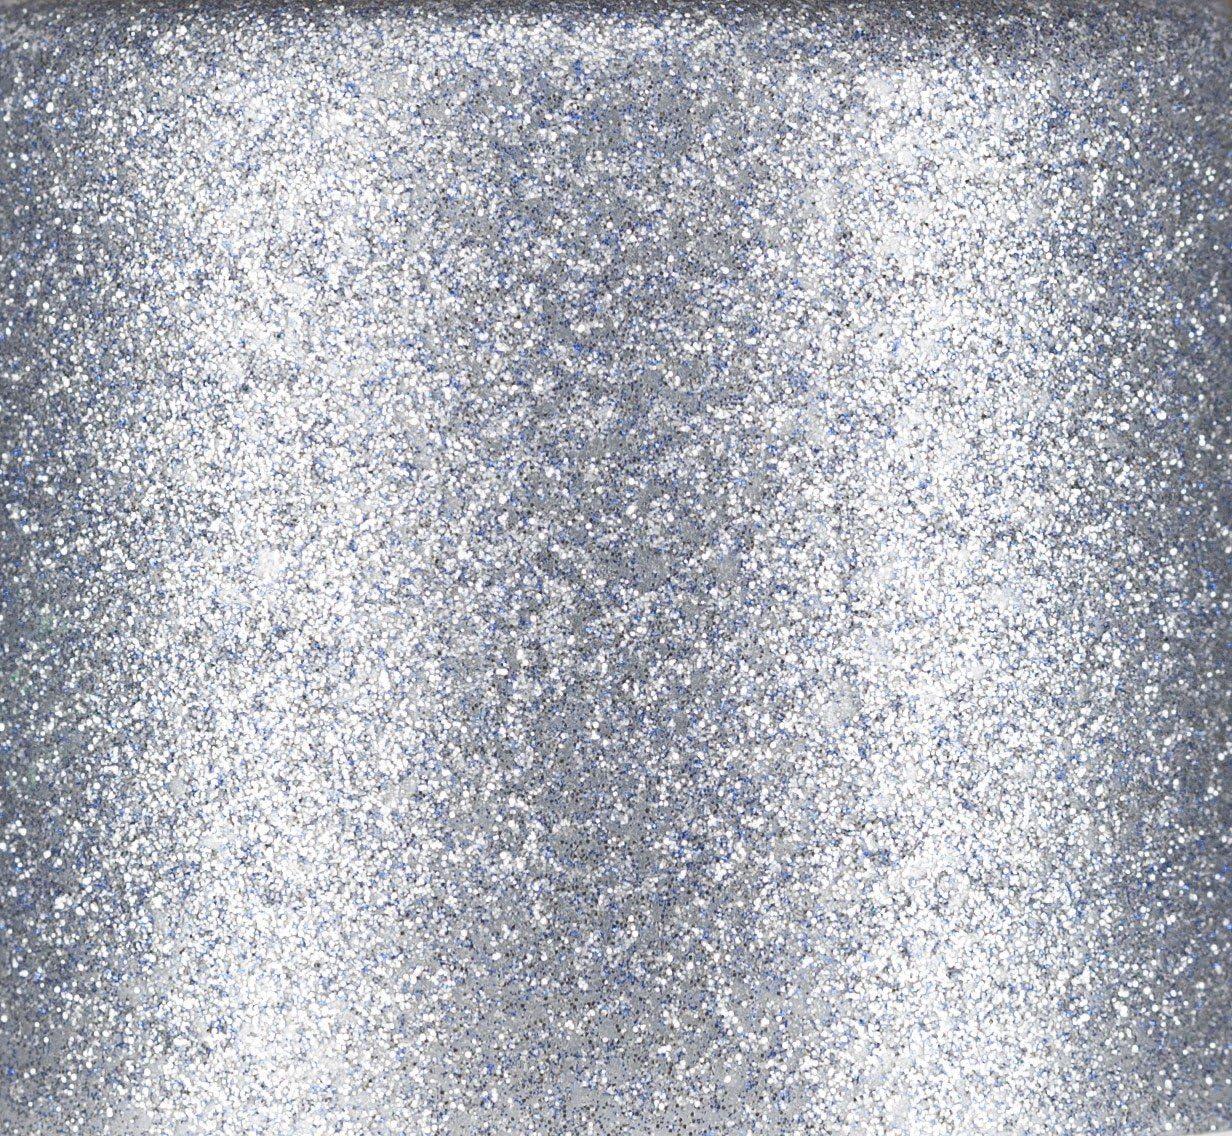 10.25 OZ Specialty Glitter Spray Paint - Silver Glitter